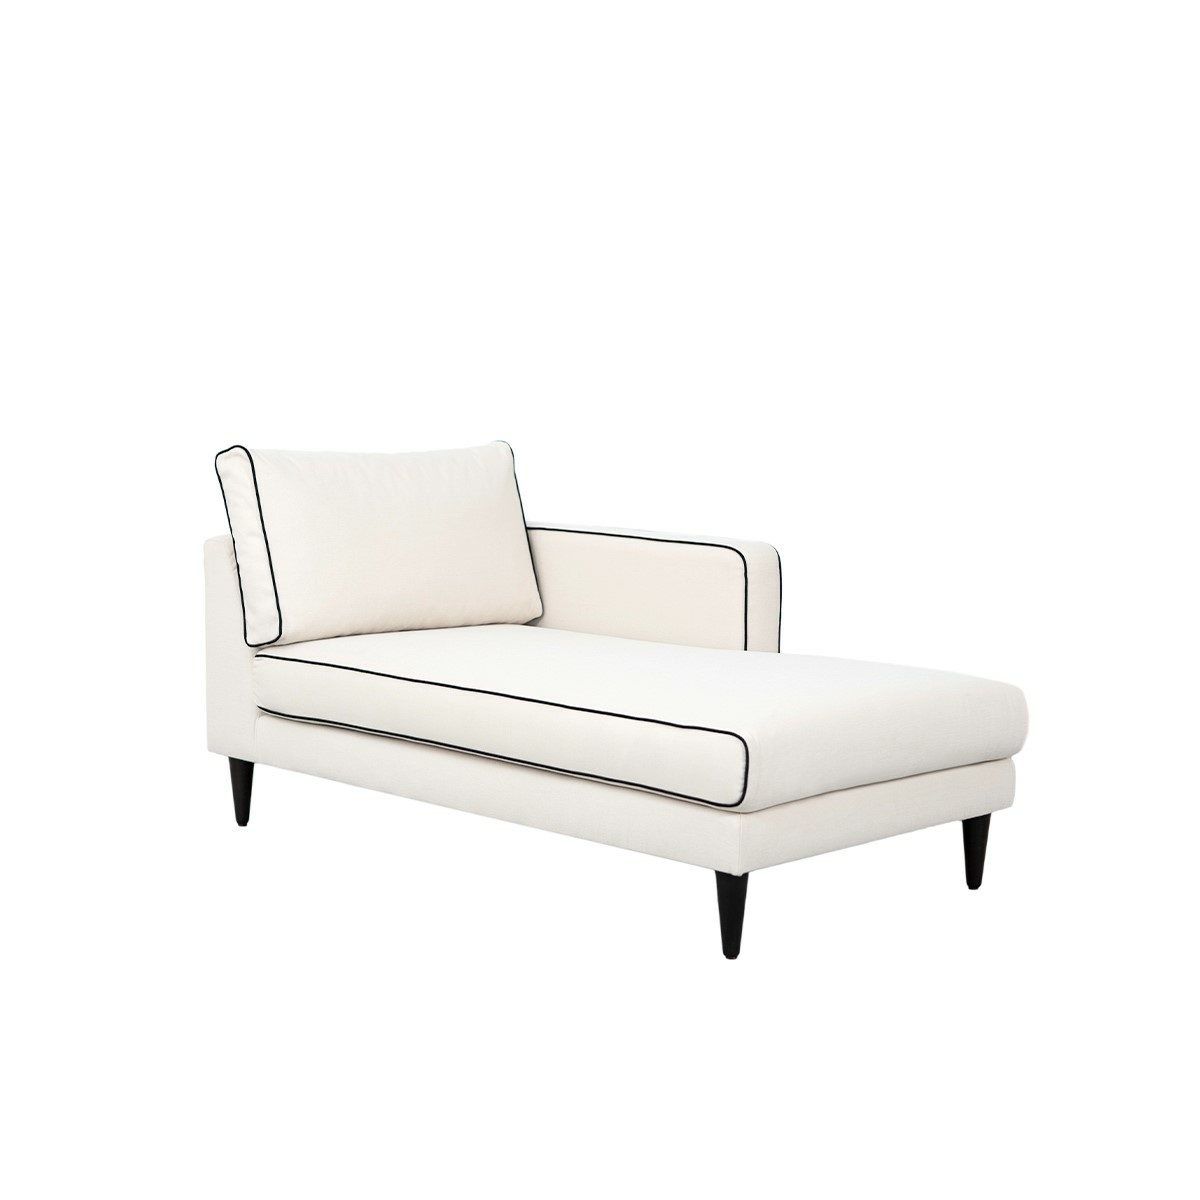 Noa sofa - Right armrest, Different Sizes - Cotton - image 1